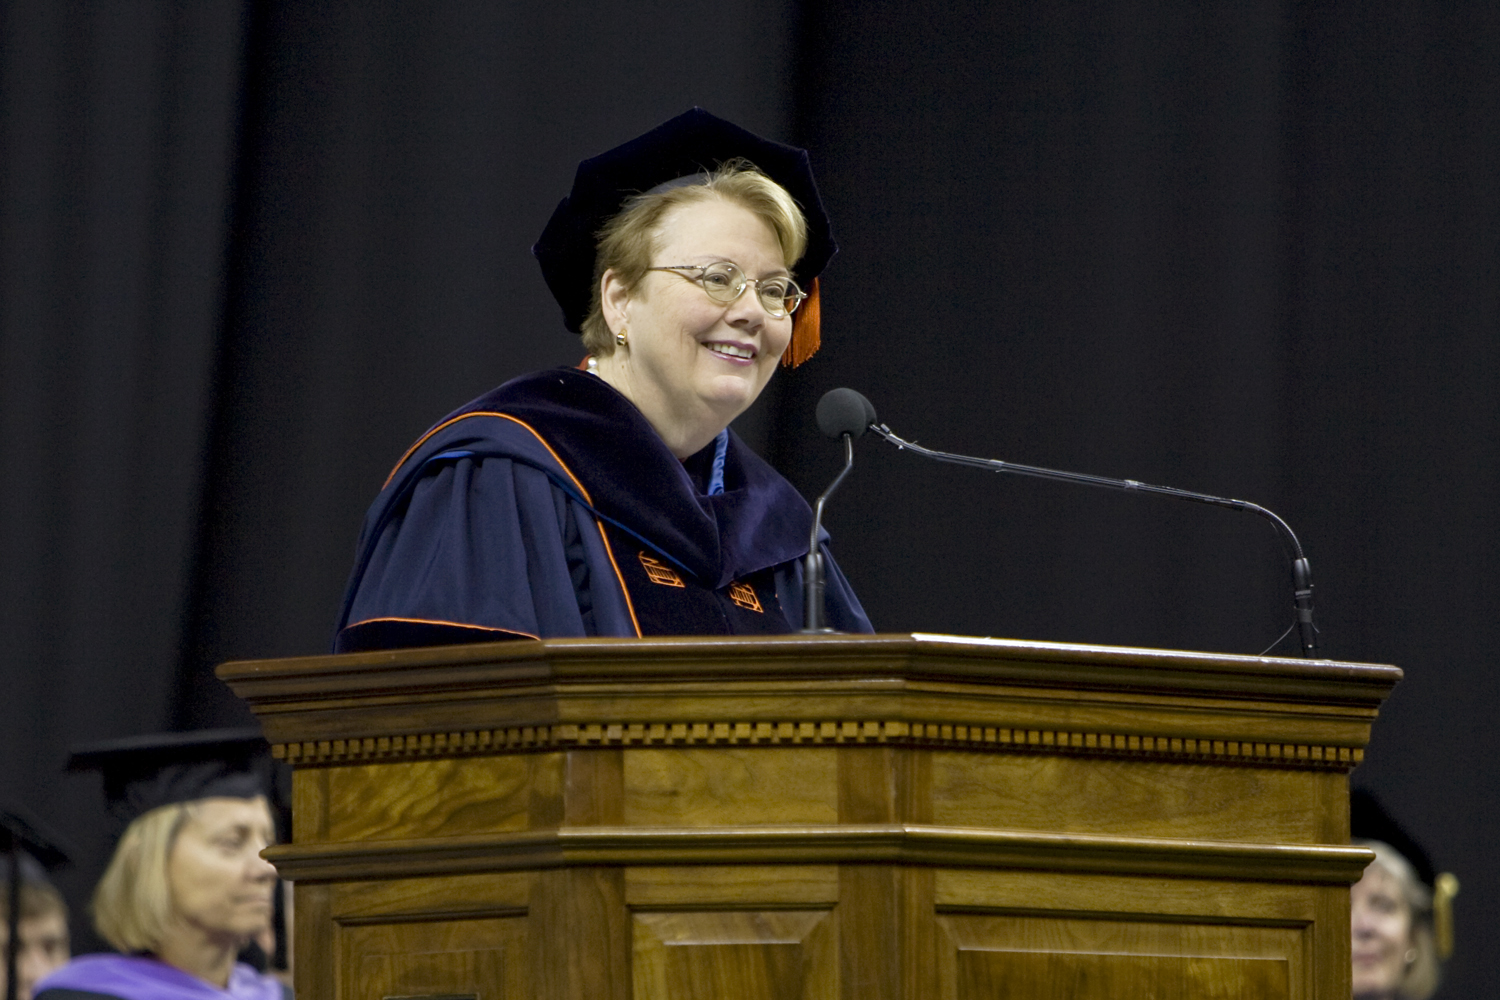 Teresa A. Sullivan speaking at a podium in Graduation attire